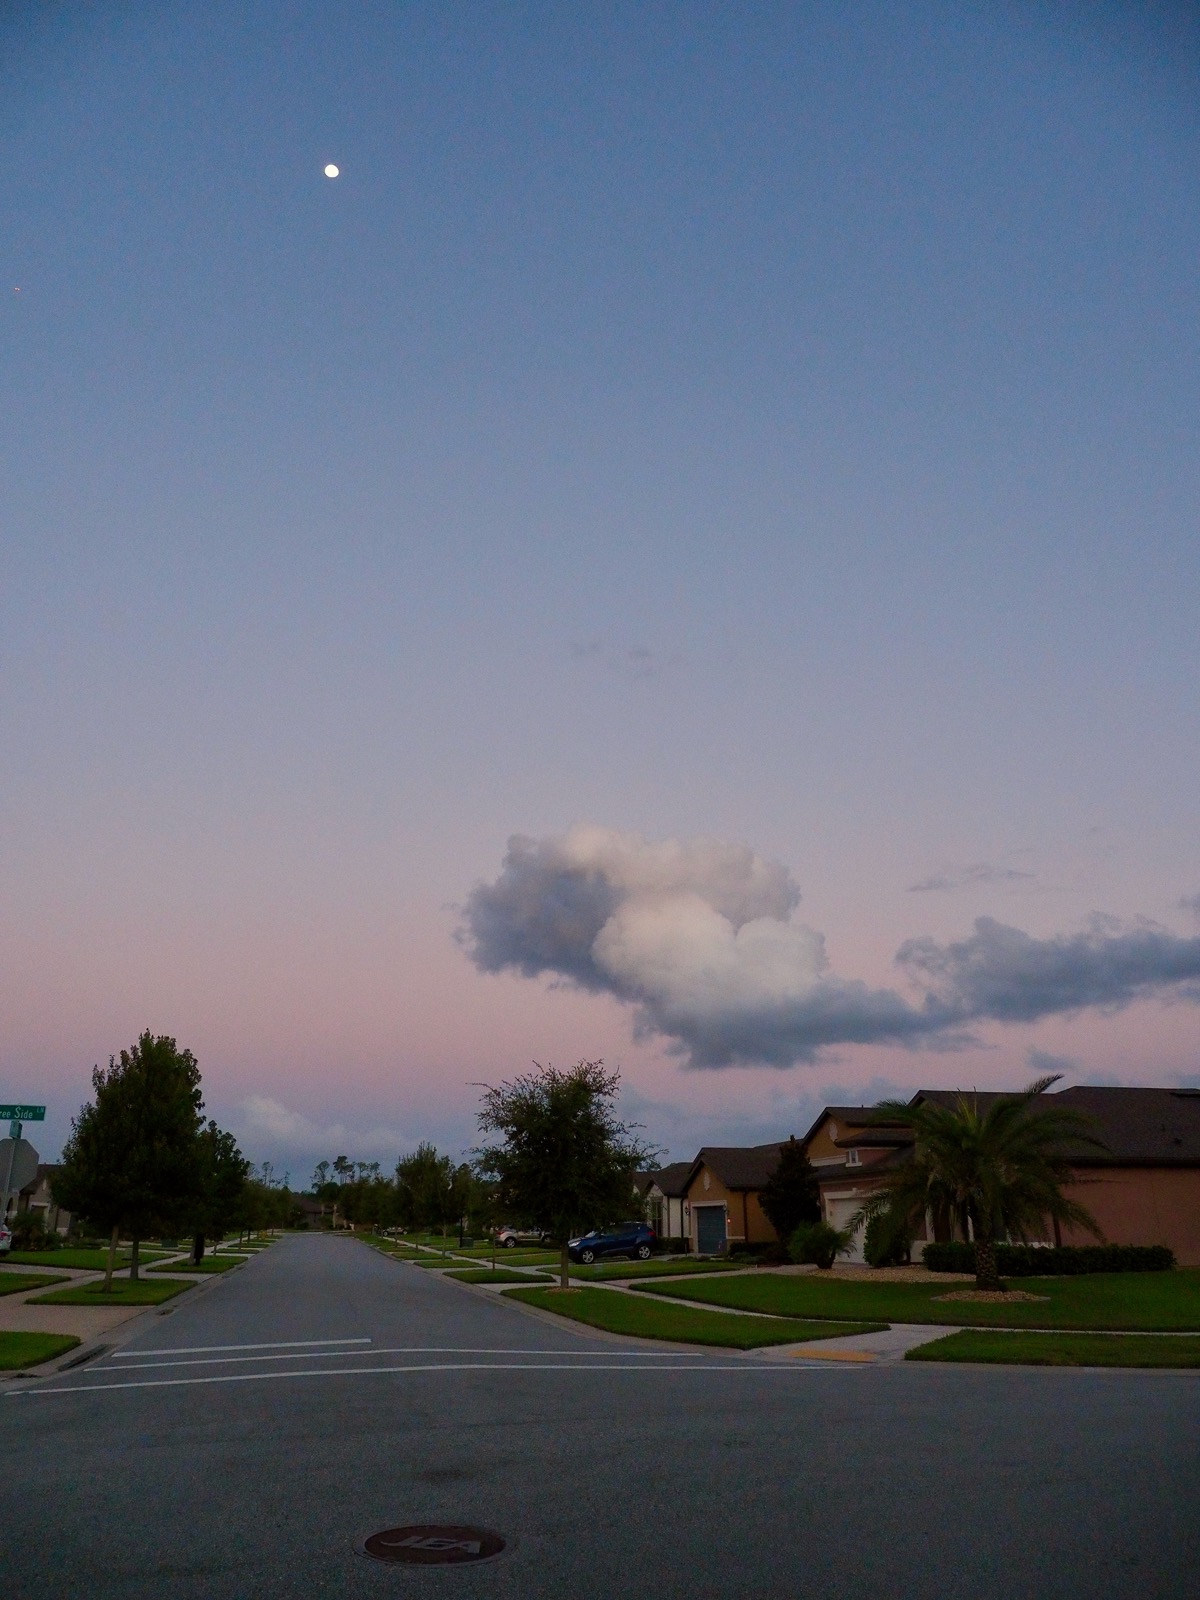 Suburban landscape wide-angle, portrait orientation, waning gibbous moon upper left corner, low cloud softly illuminated above the houses.